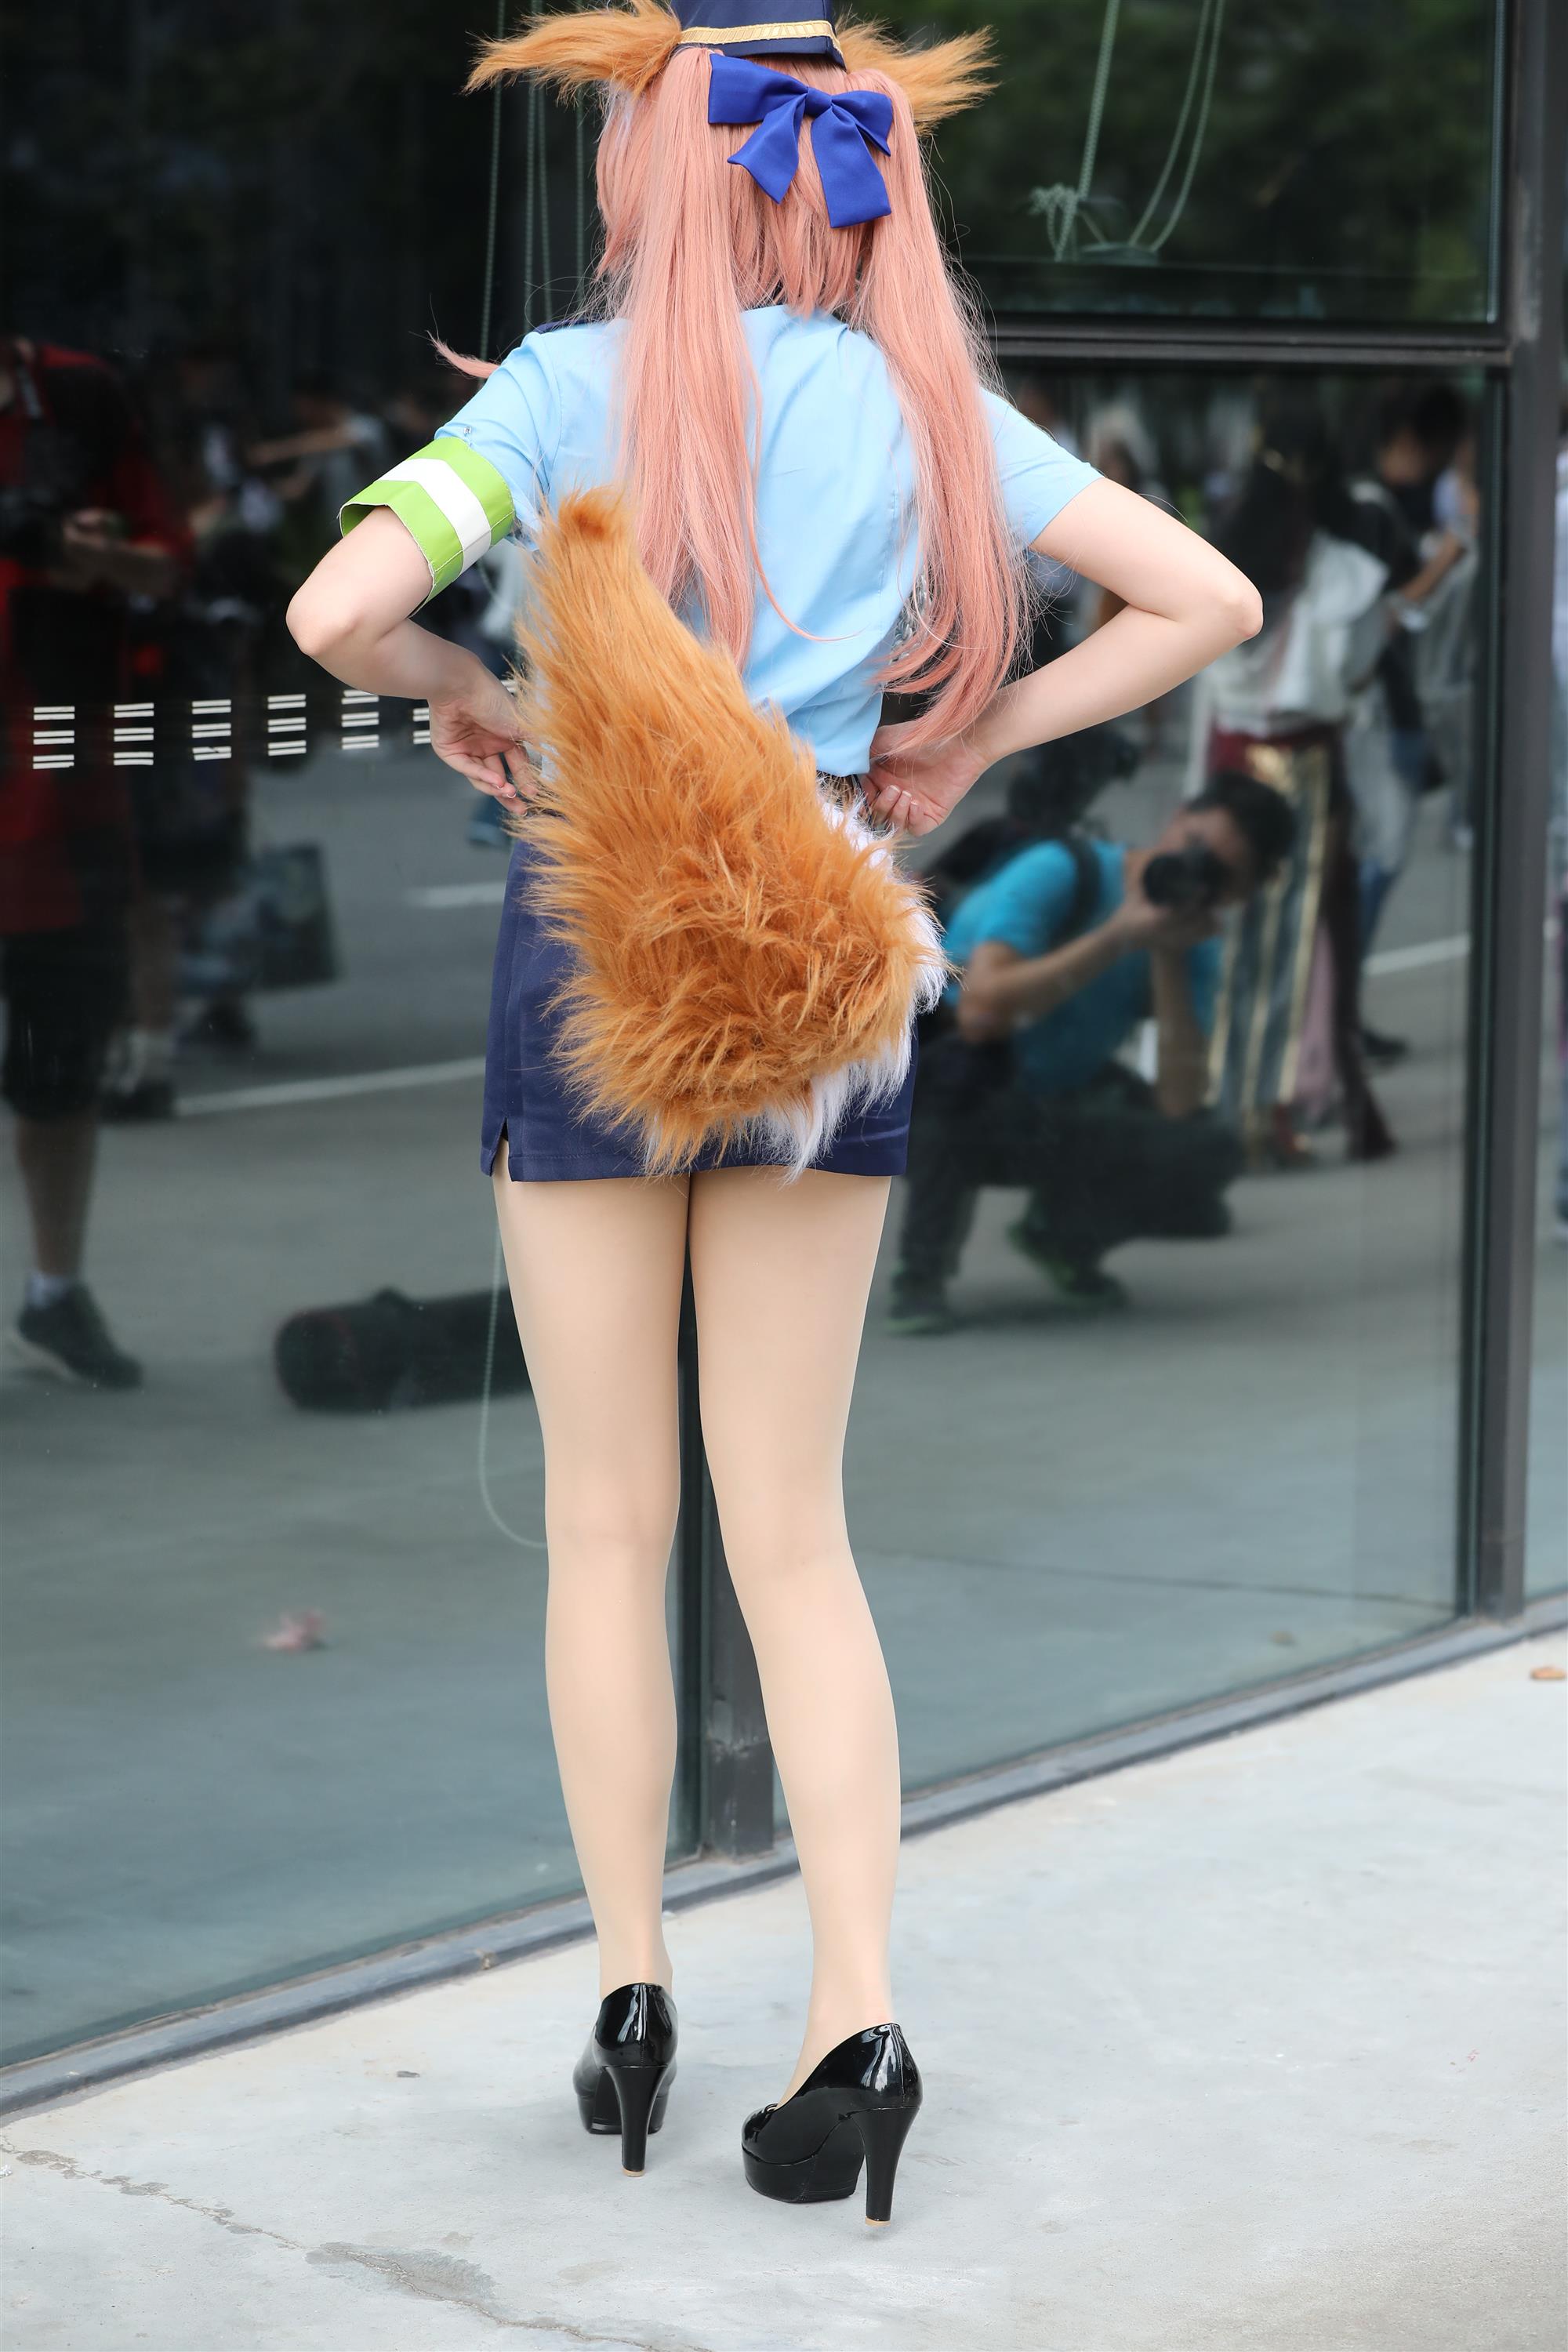 Street cosplay girl - 50.jpg